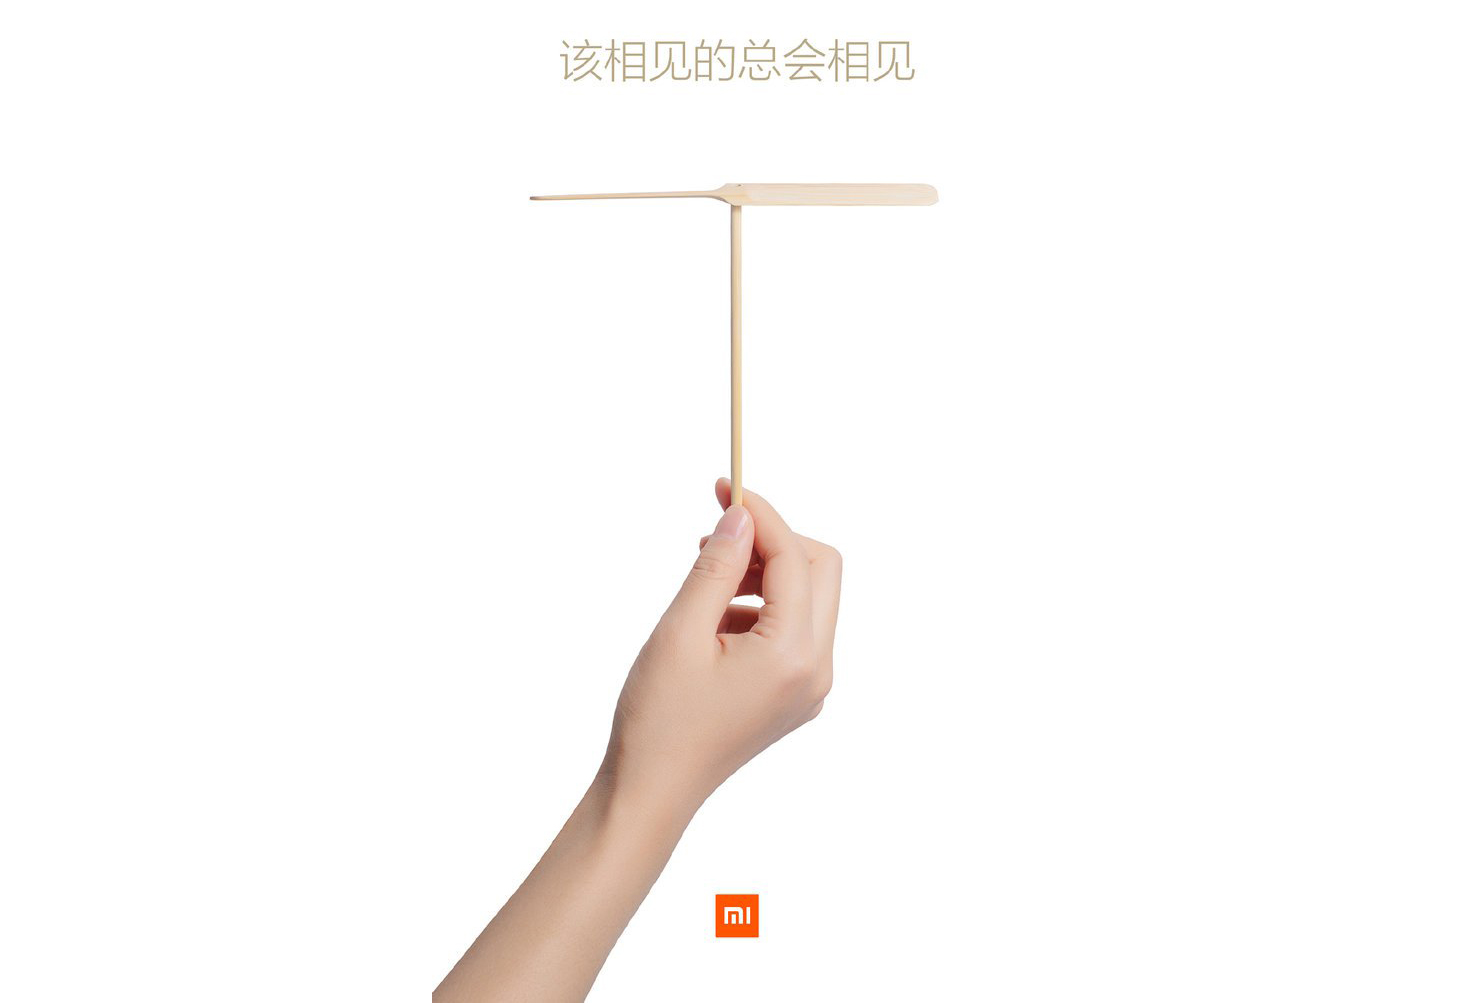 Le drone de Xiaomi, en approche